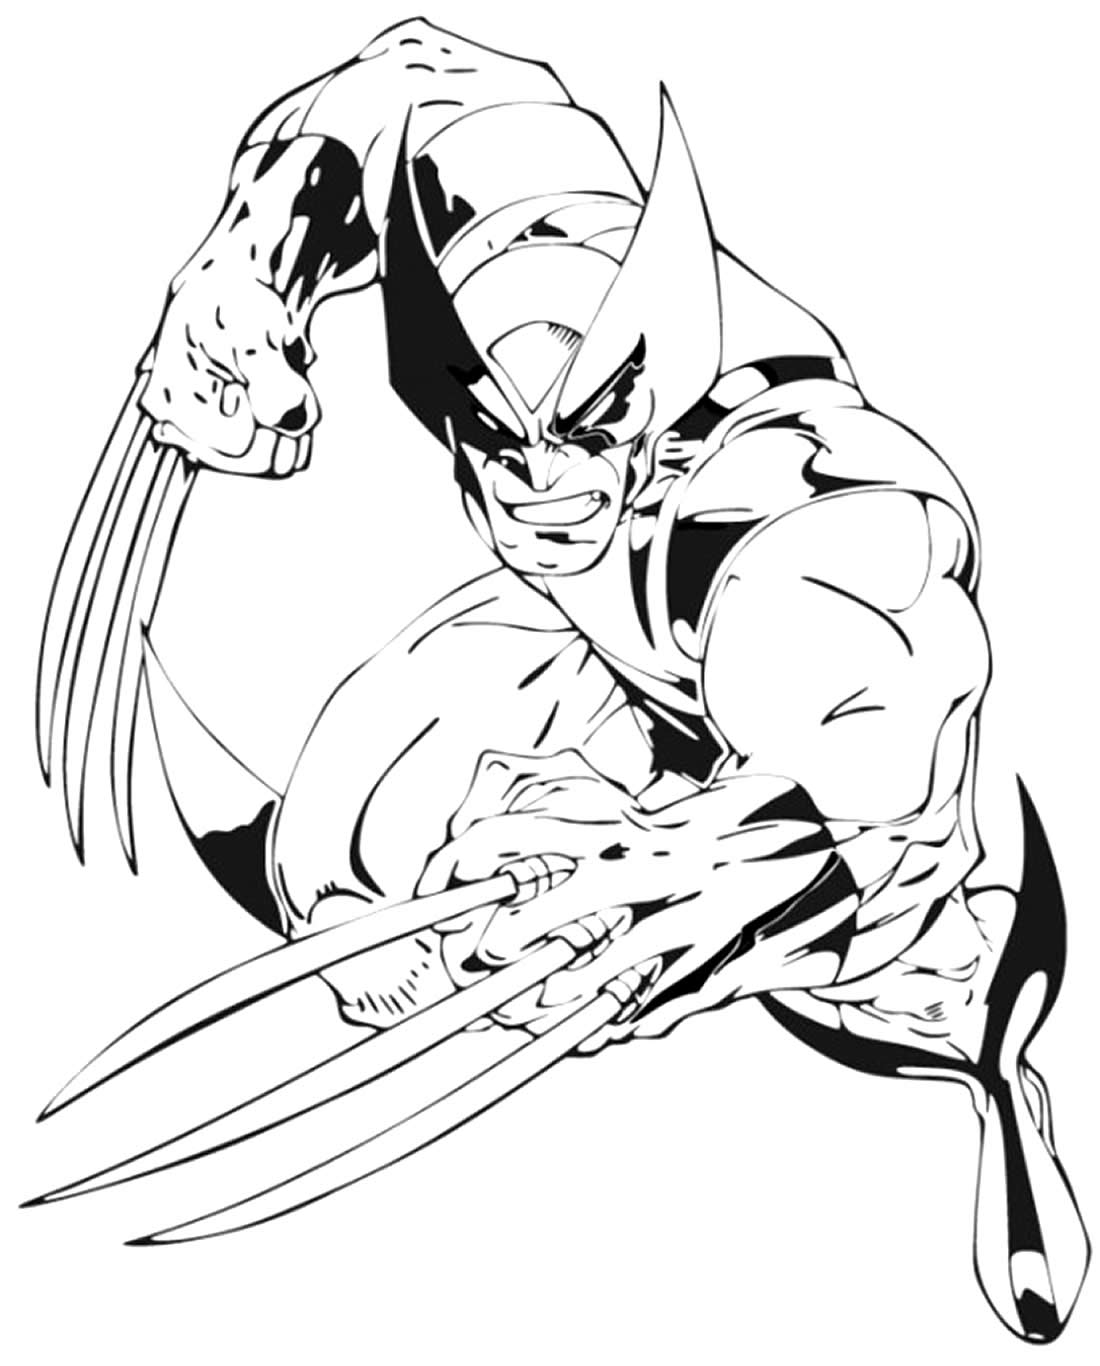 Molde de Wolverine para imprimir e colorir